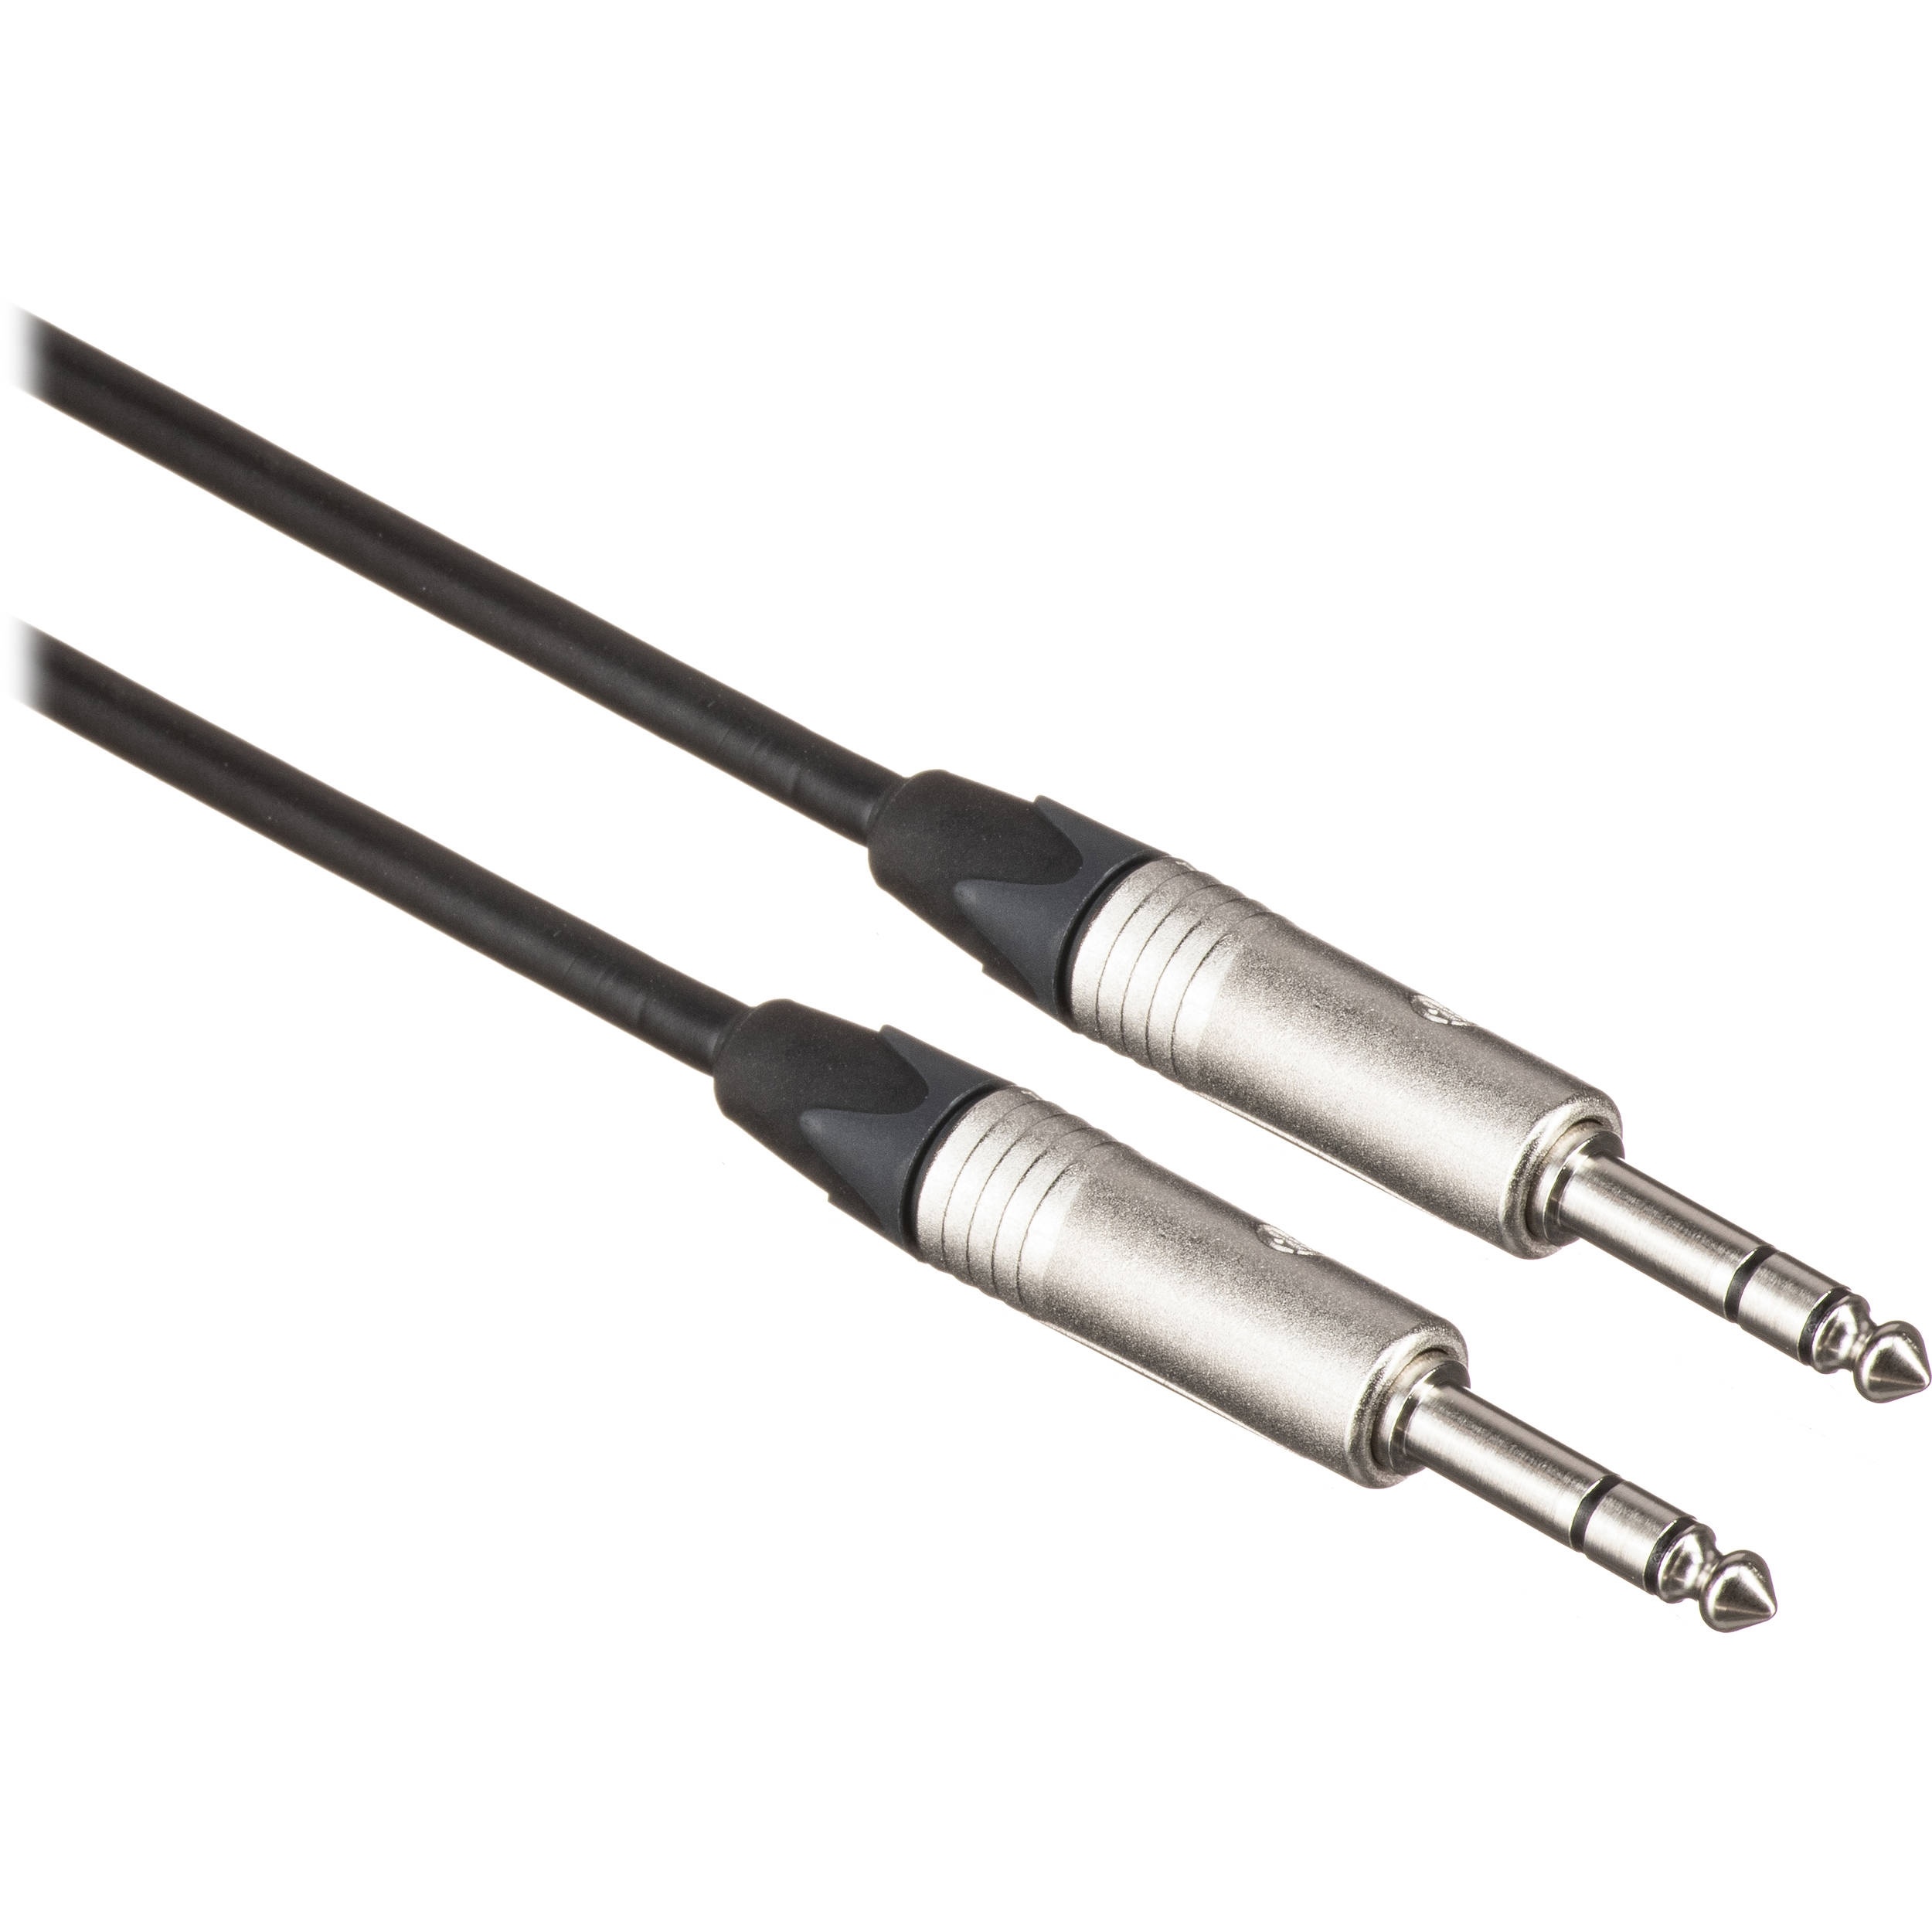 Canare Starquad TRSM-TRSM Cable (Black, 25')